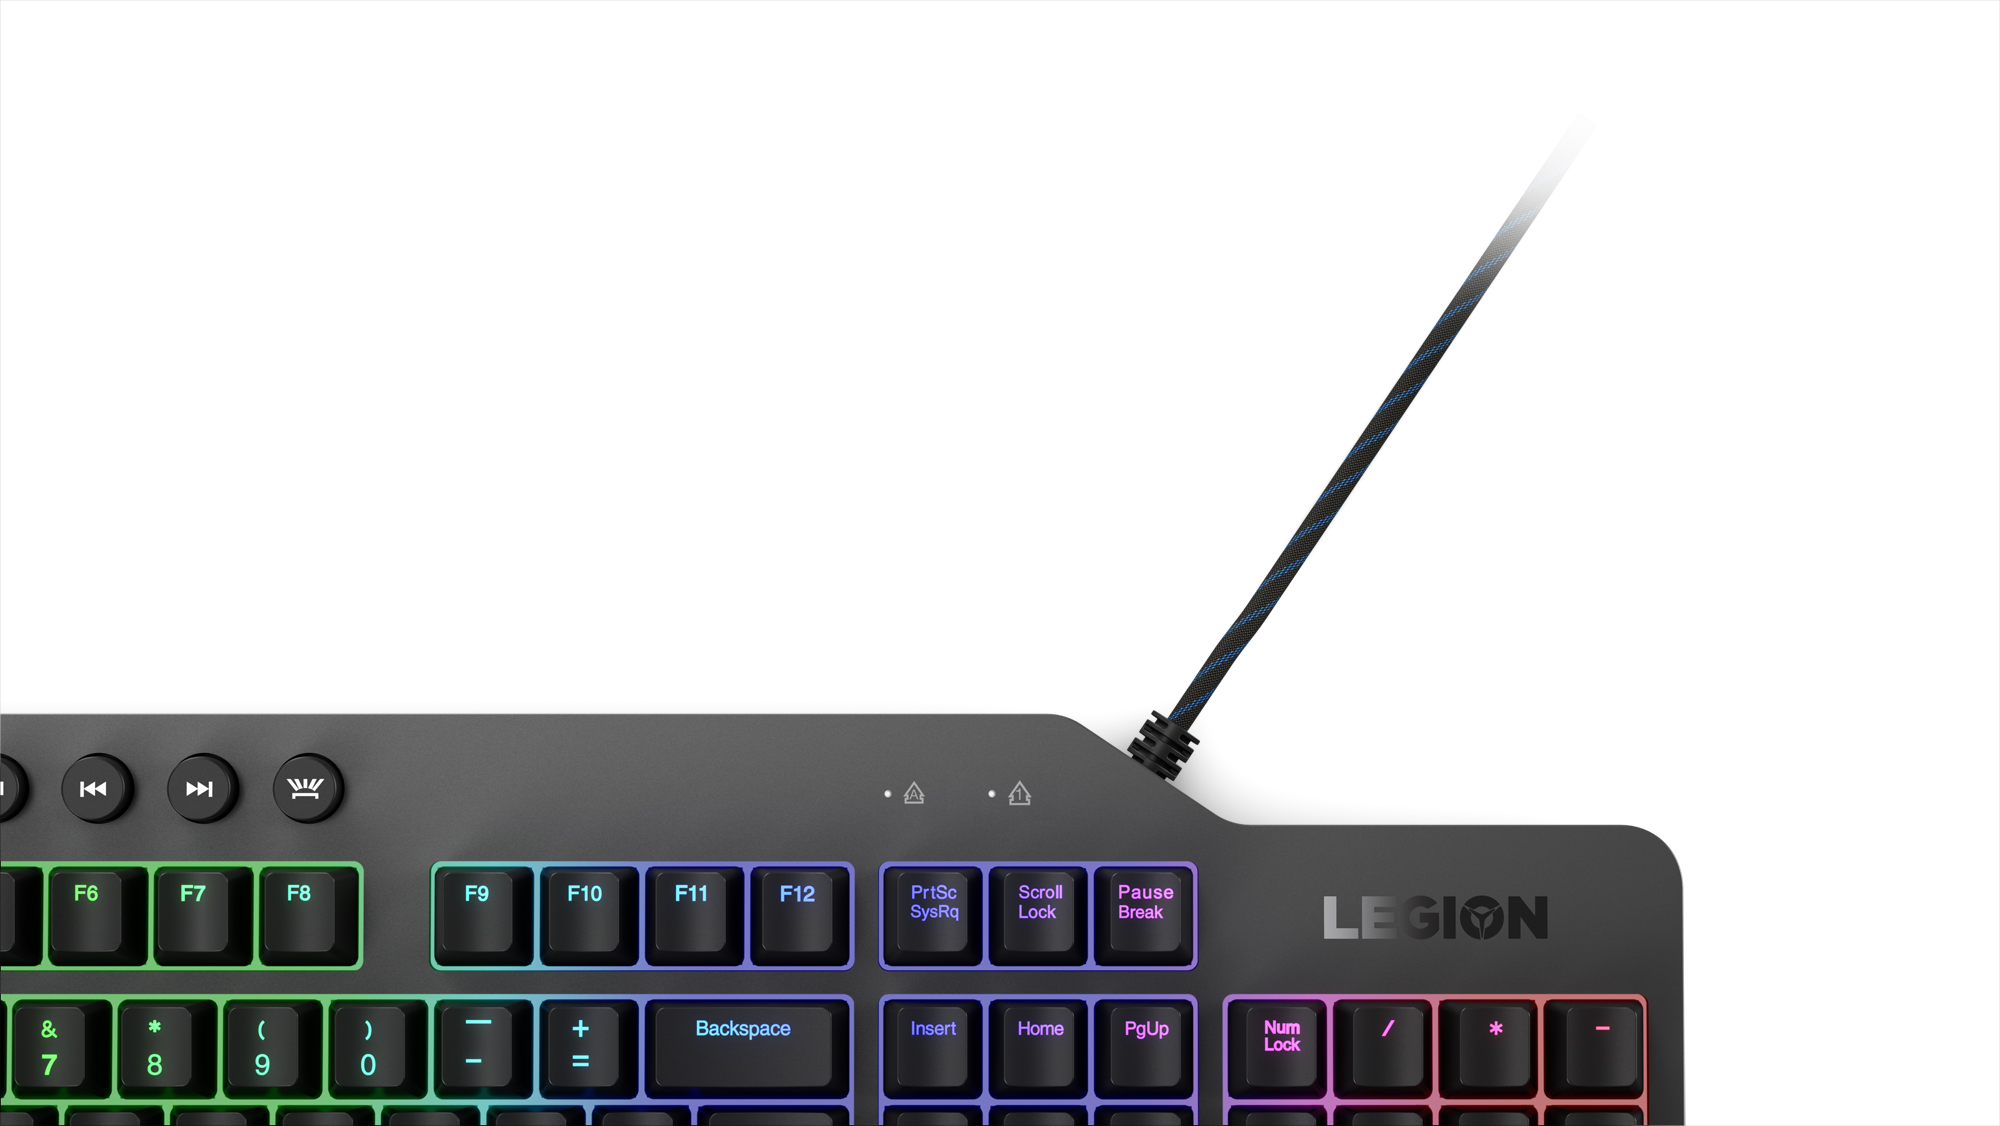 lenovo announce new legion gaming peripherals ces 2019 06 k500 full 104 keys anti ghosting